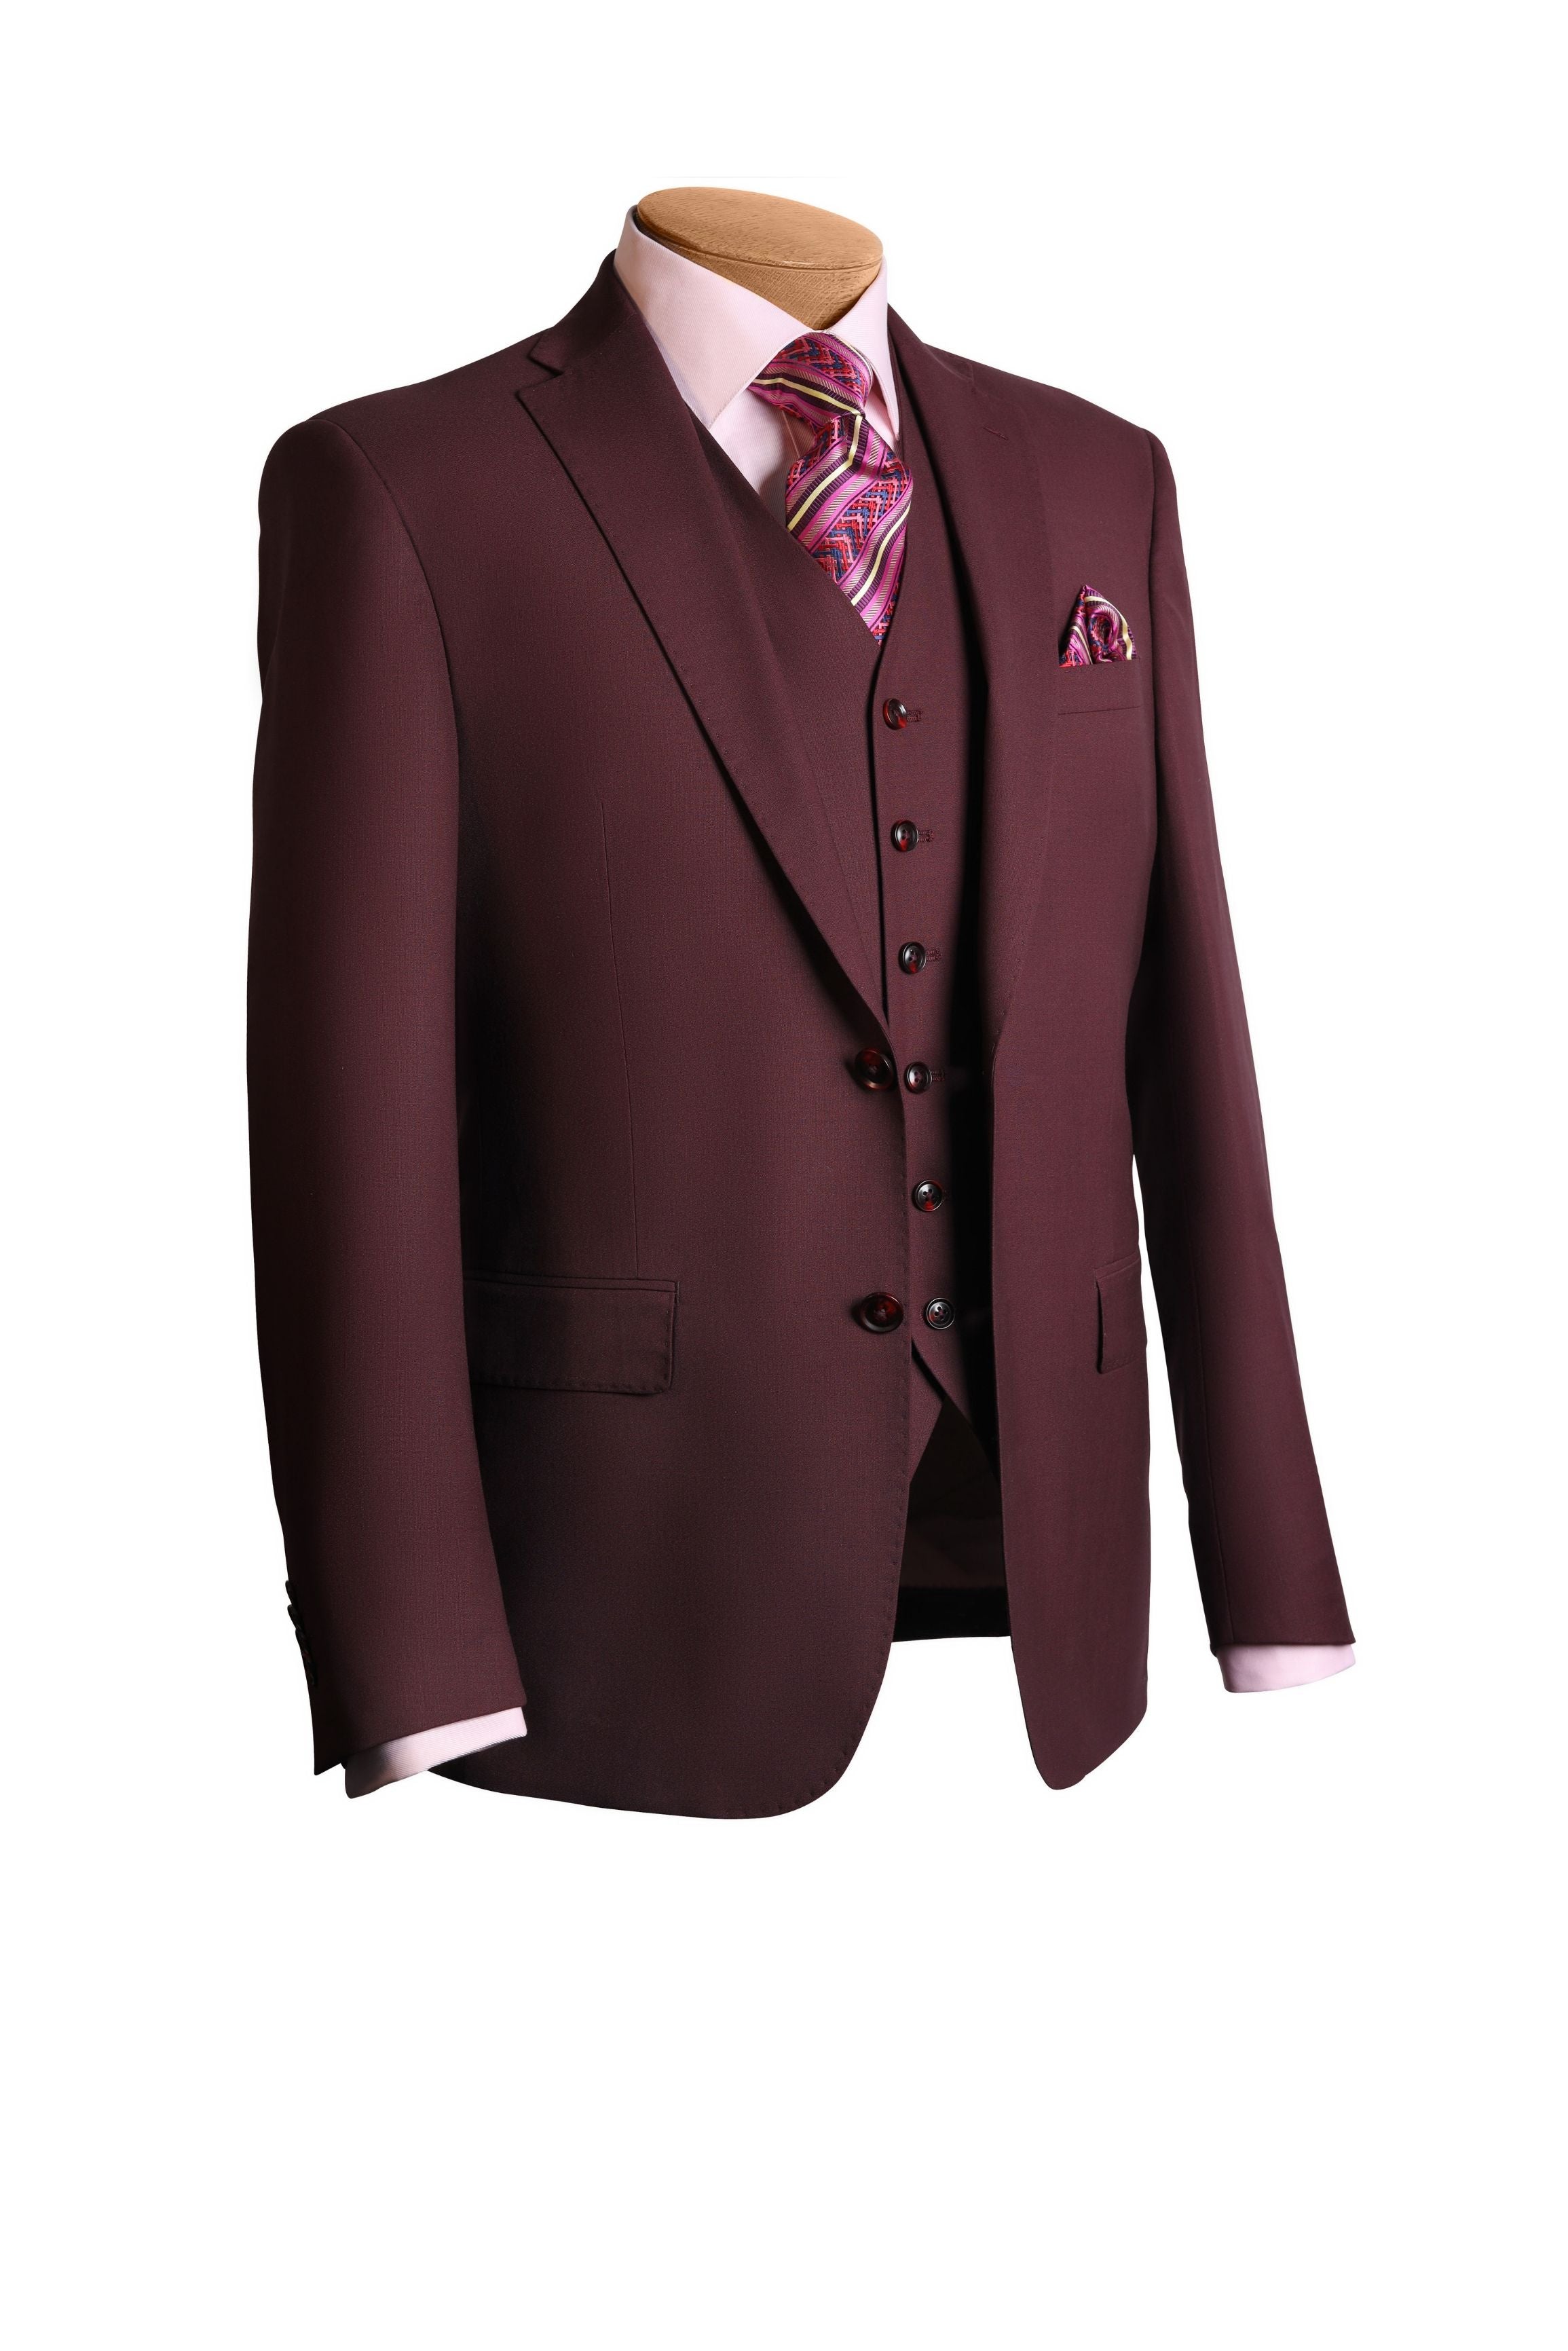 Wine 3 Piece Modern Suit - Mastroianni Fashions